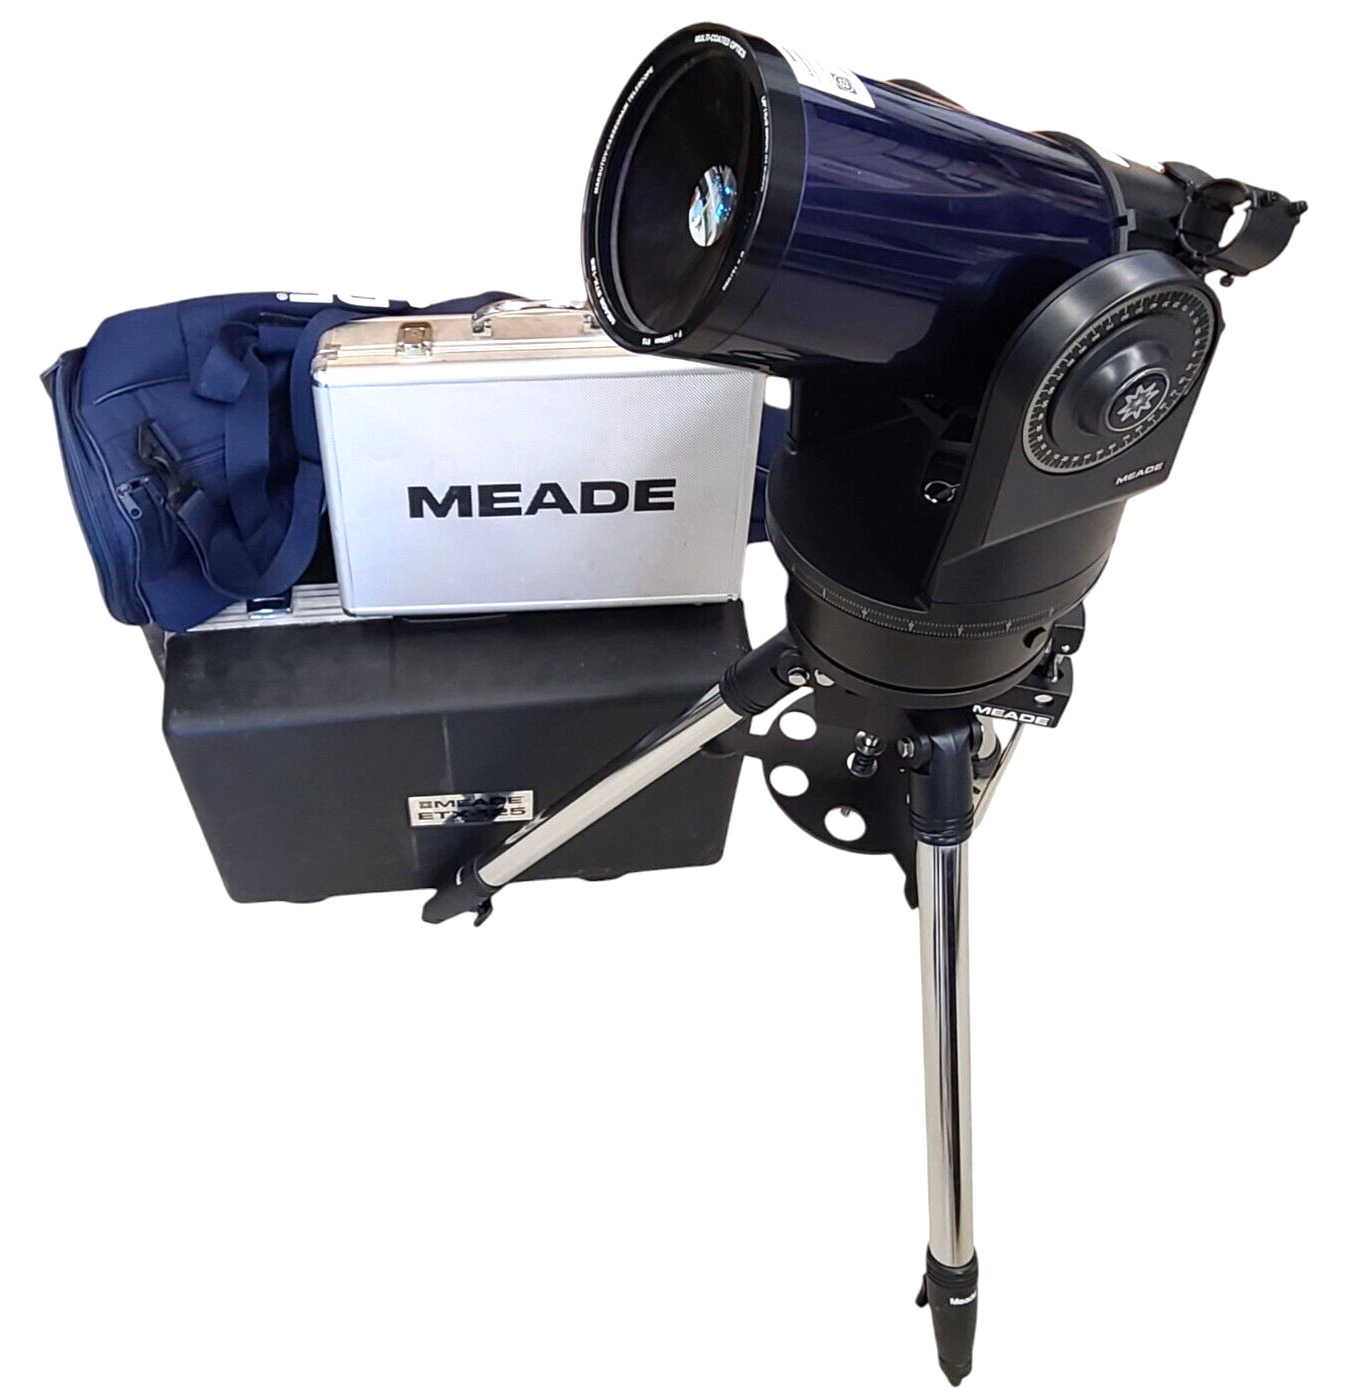 Meade ETX-125EC Astro Telescope with Case, Tripod, Controllers, Lenses, & More